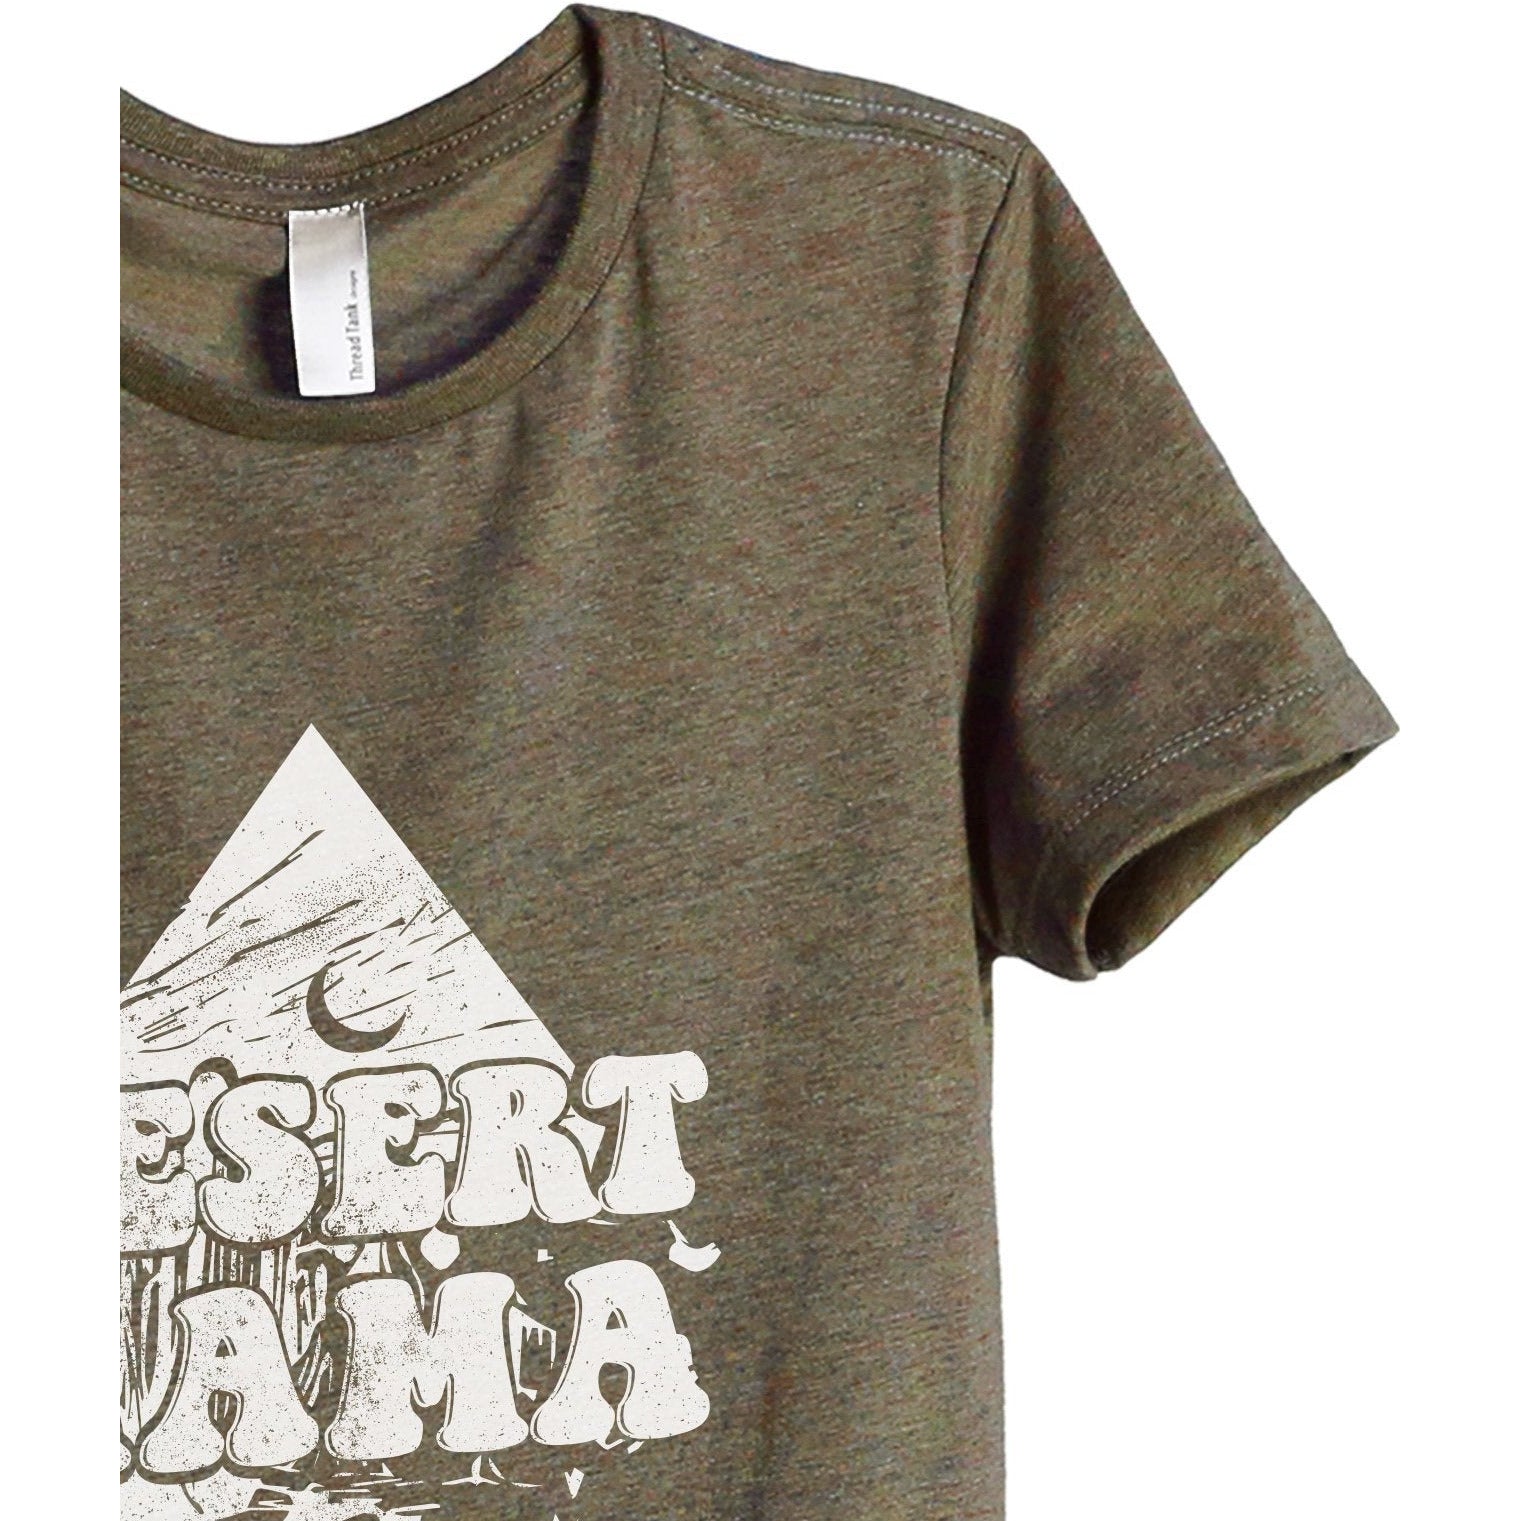 Desert Mama Women's Relaxed Crewneck T-Shirt Top Tee Heather Sage Zoom Details